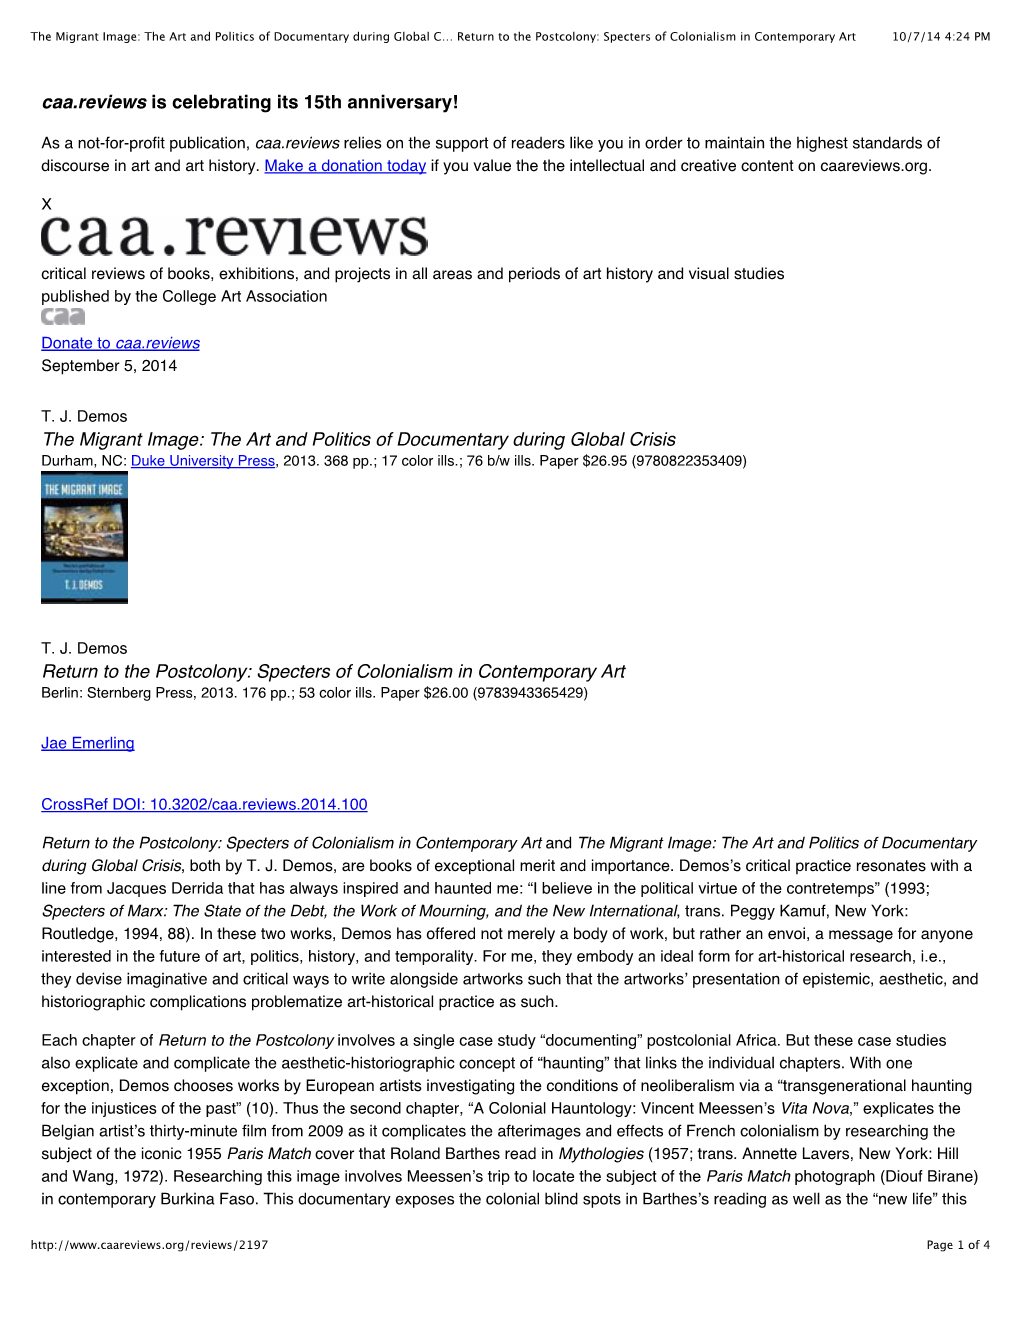 The Art and Politics of Documentary During Global Crisis Durham, NC: Duke University Press, 2013